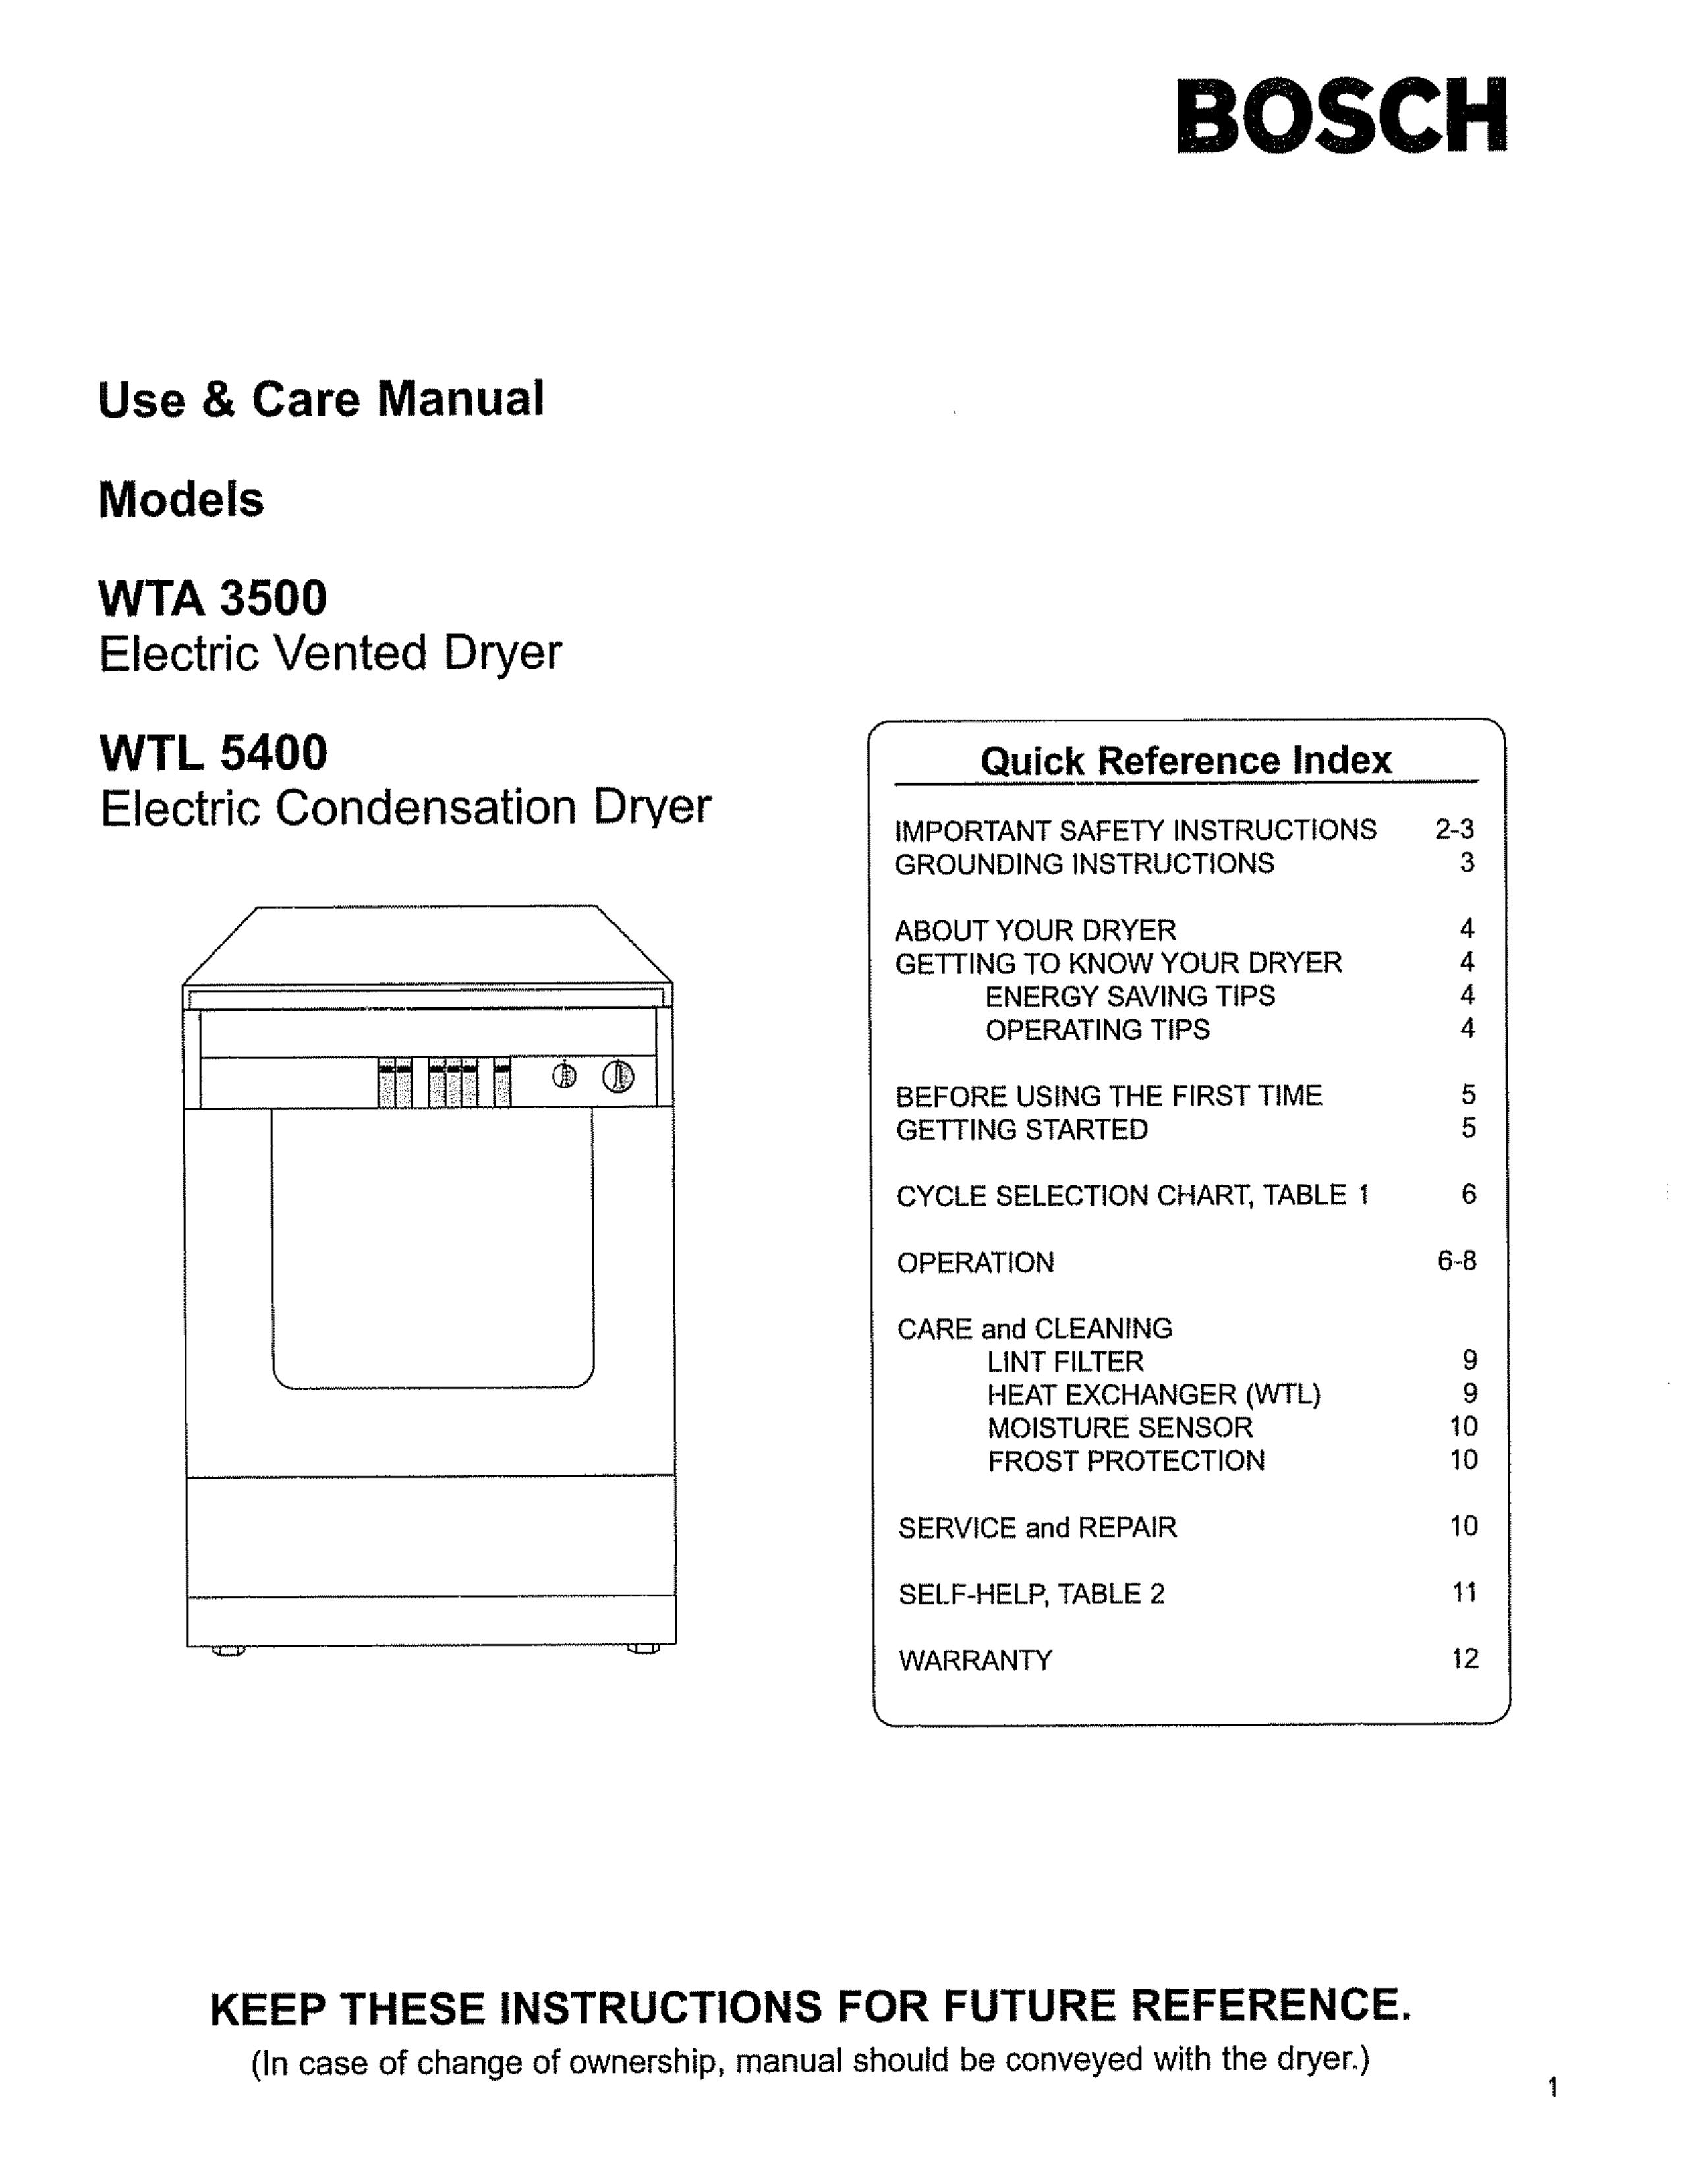 Bosch Appliances WTL 5400 Clothes Dryer User Manual